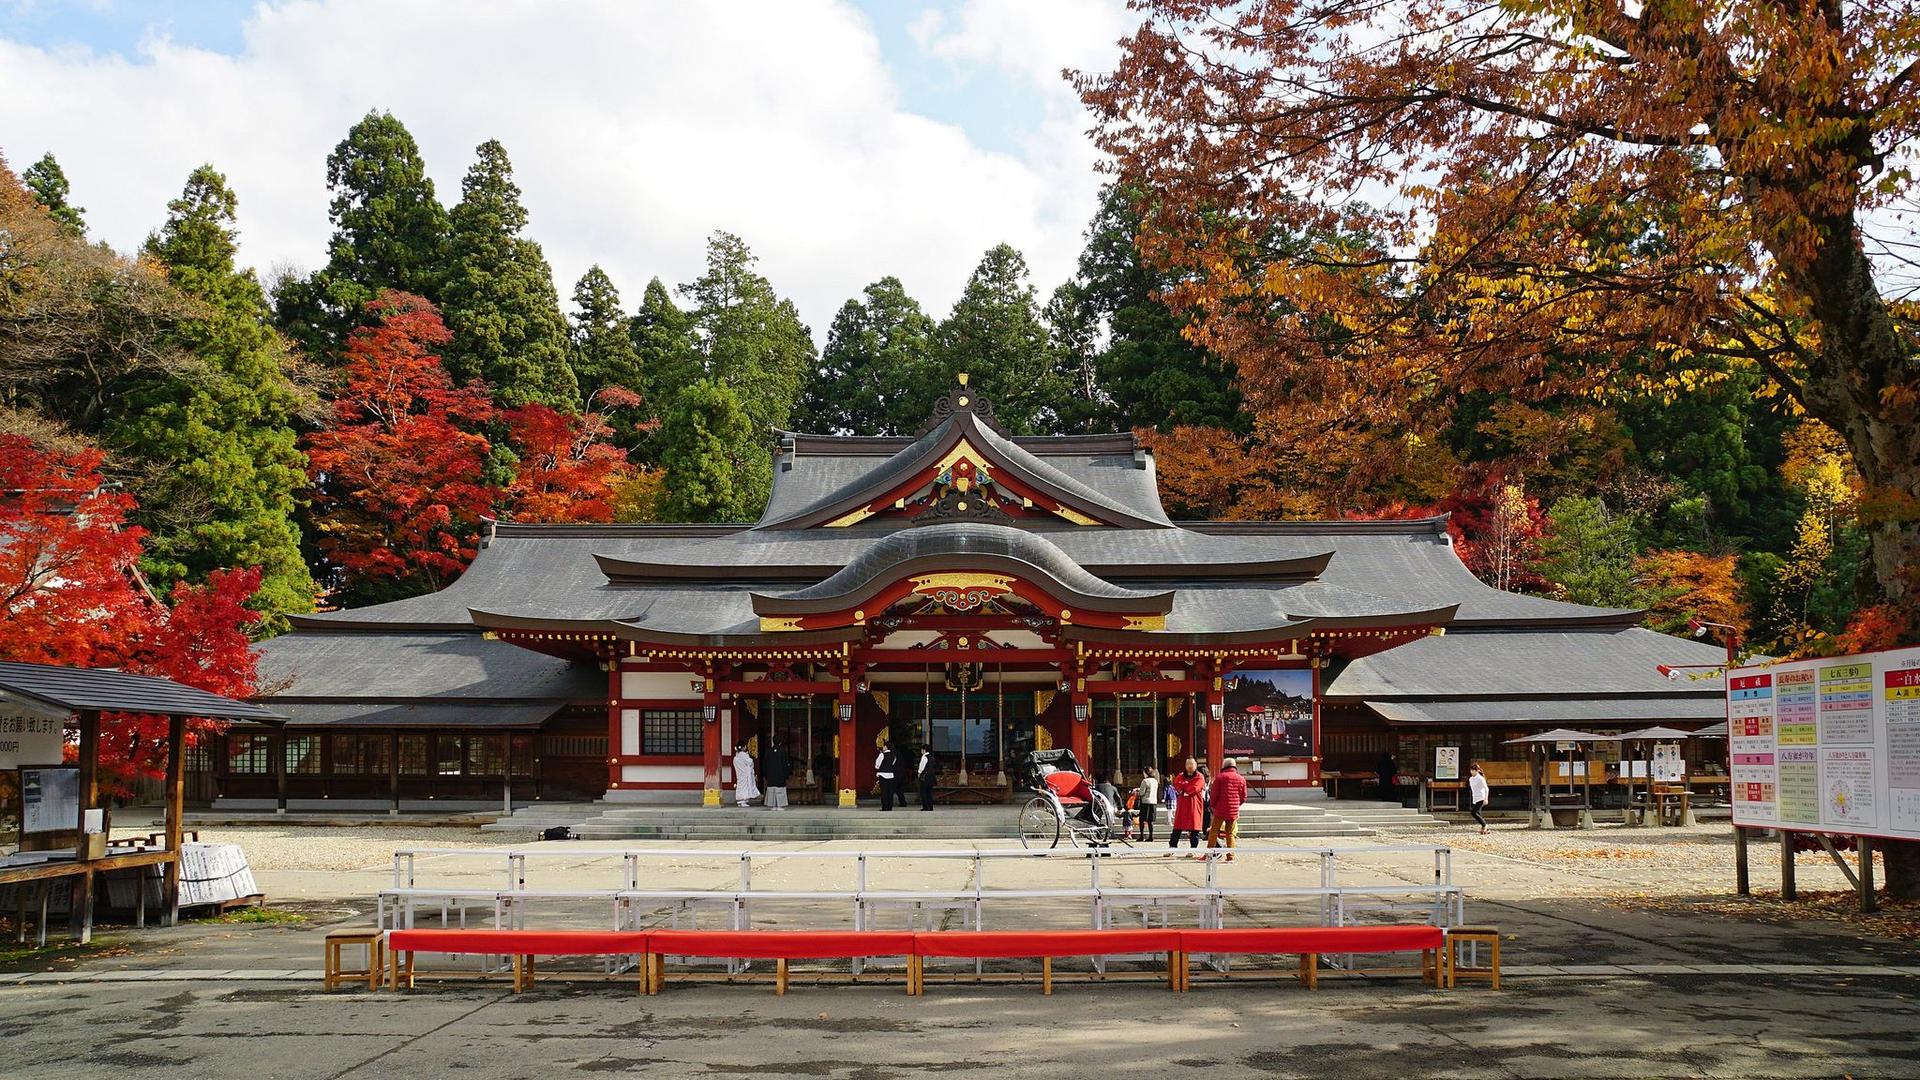 Morioka Hachimangū Shrine